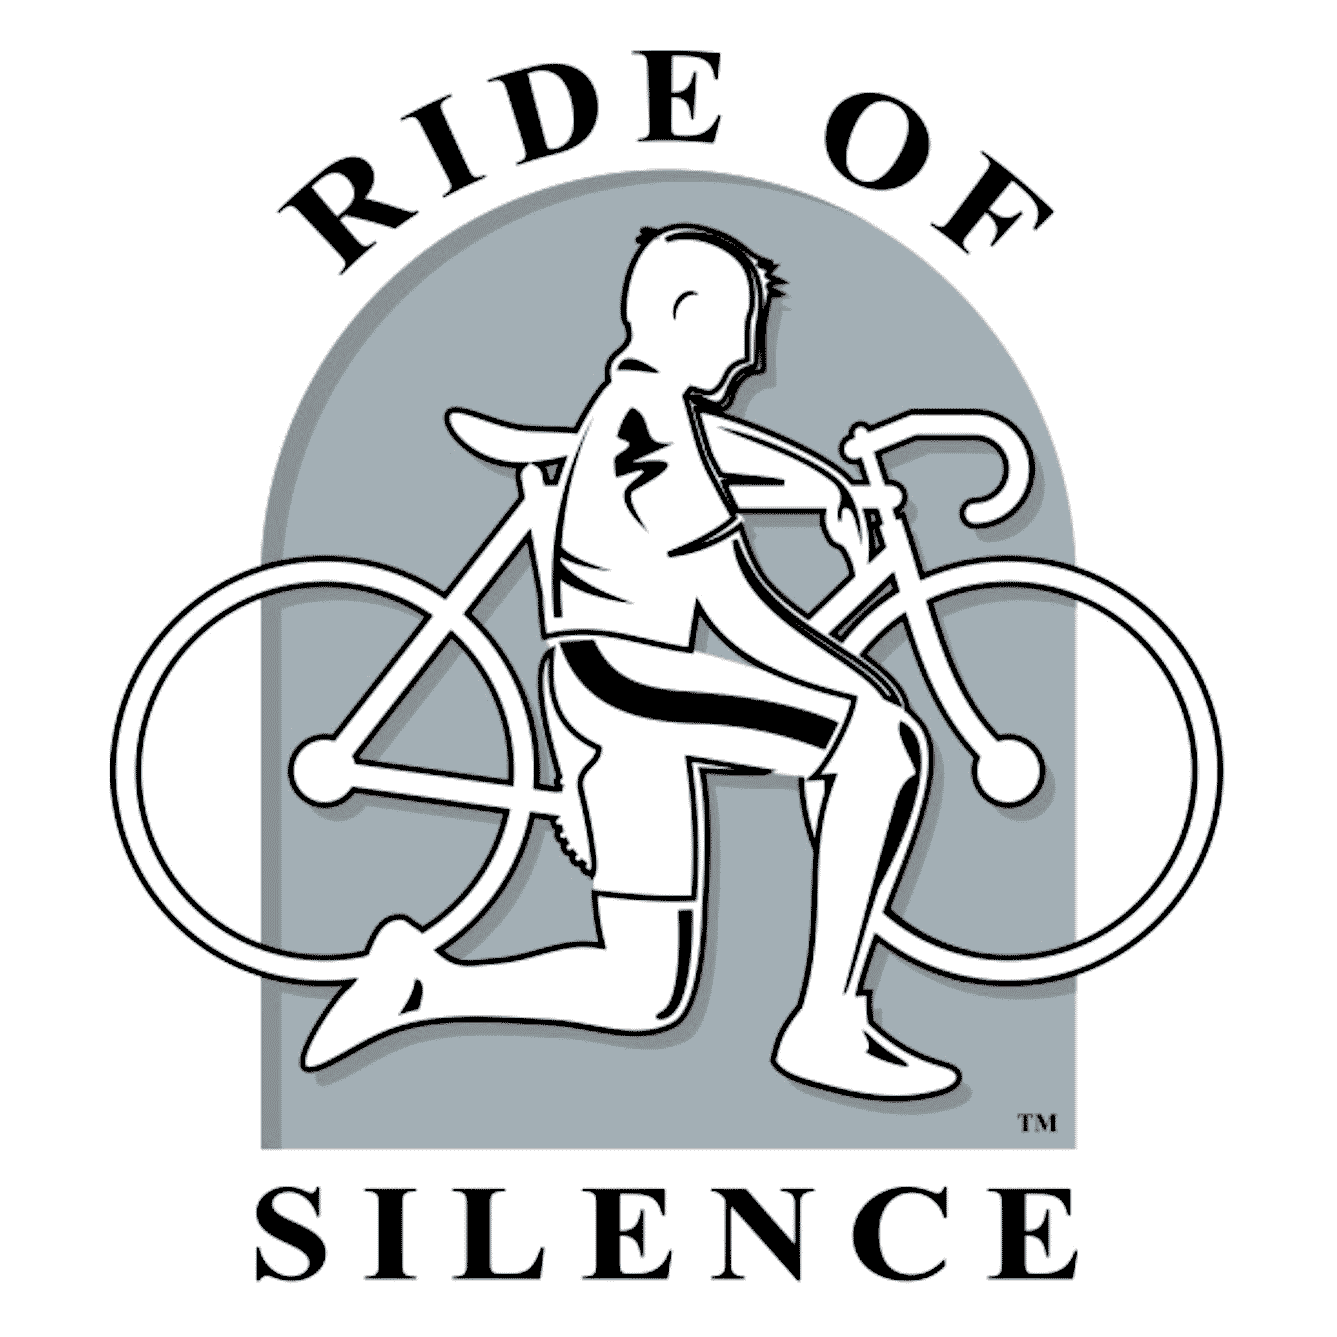 www.rideofsilence.org